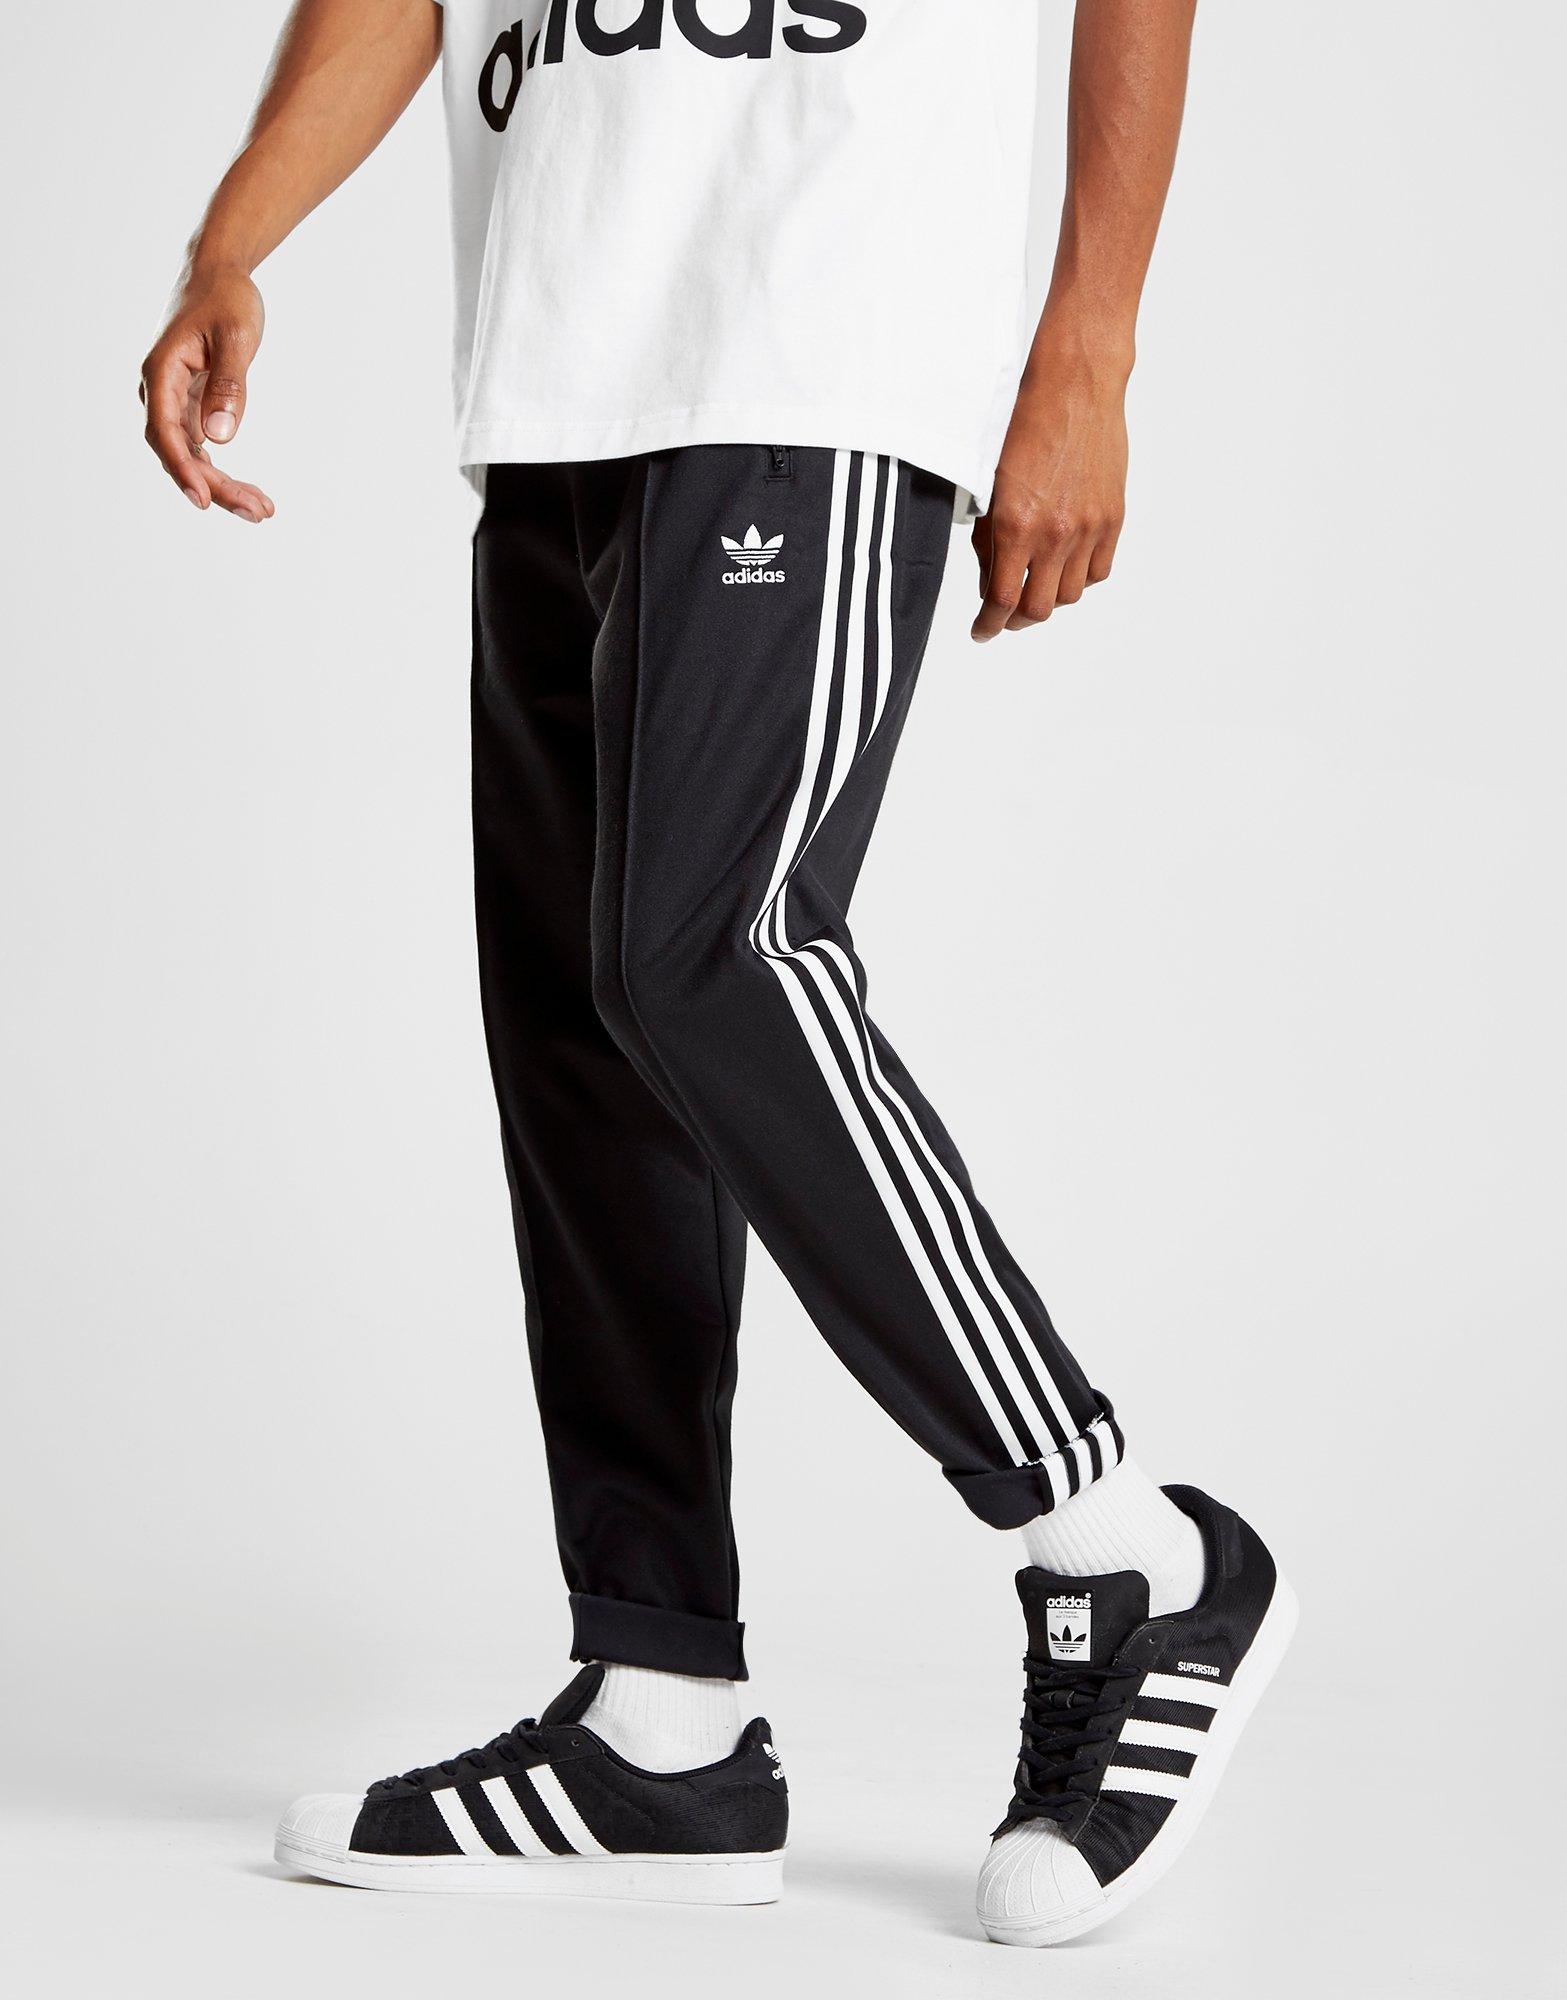 adidas classic mens track pants